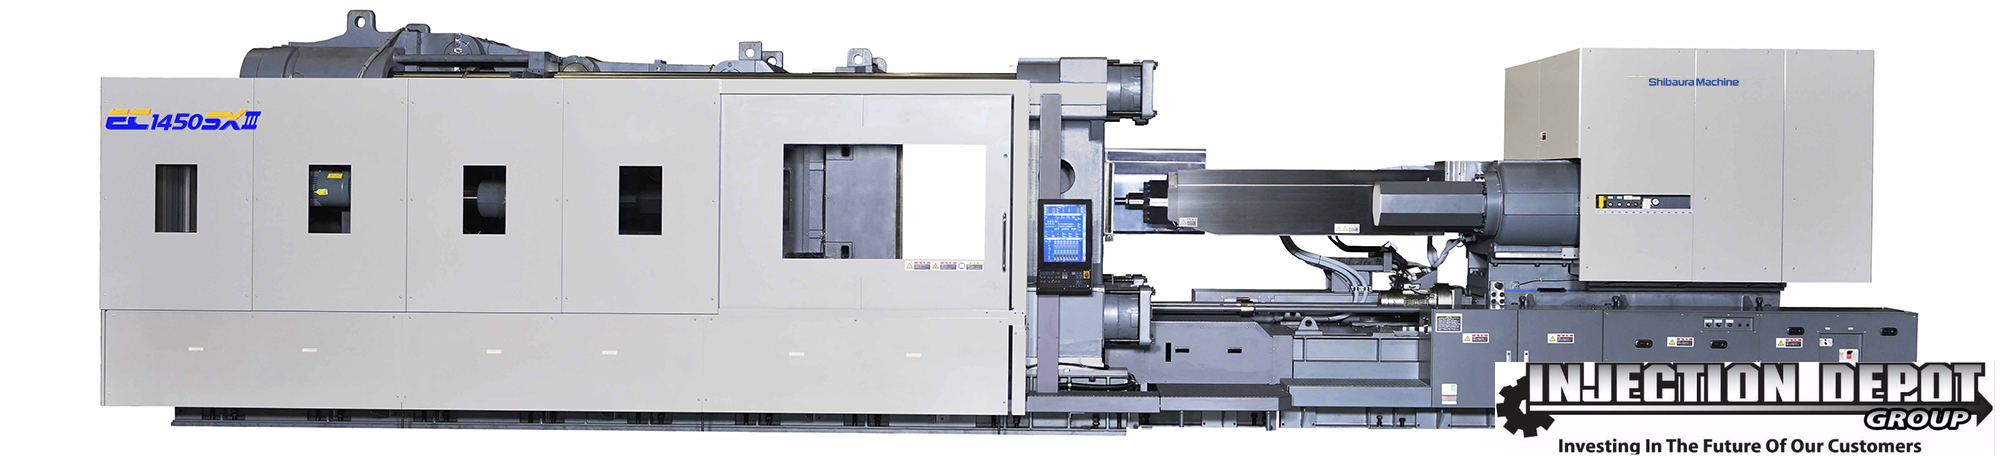 SHIBAURA MACHINE EC1450SXIIIV70-i120 B Horizontal Injection Moulding Machines | INJECTION DEPOT GROUP